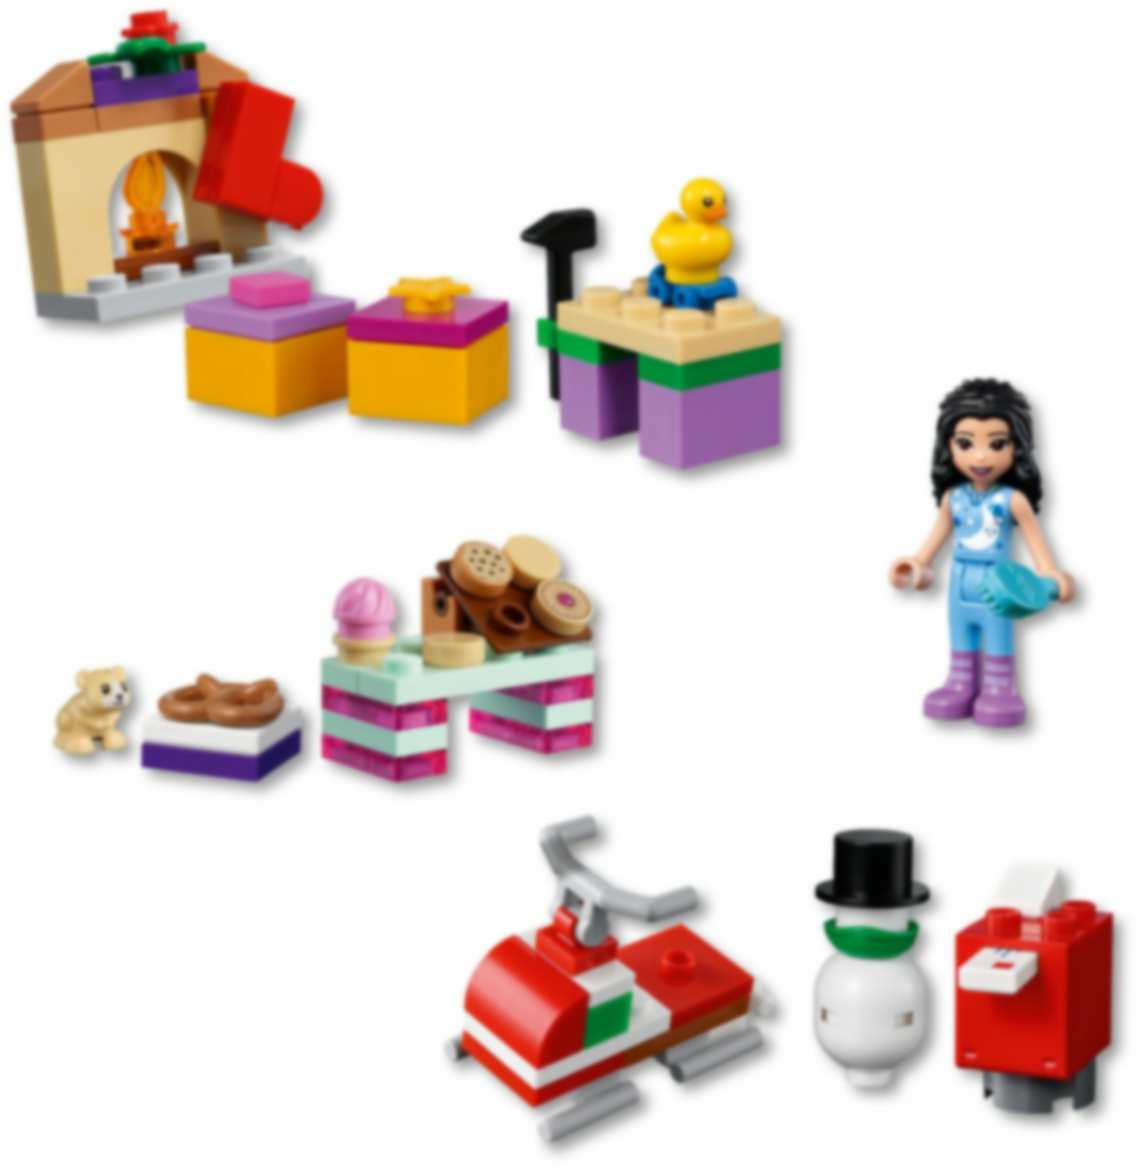 LEGO® Friends Advent Calendar components